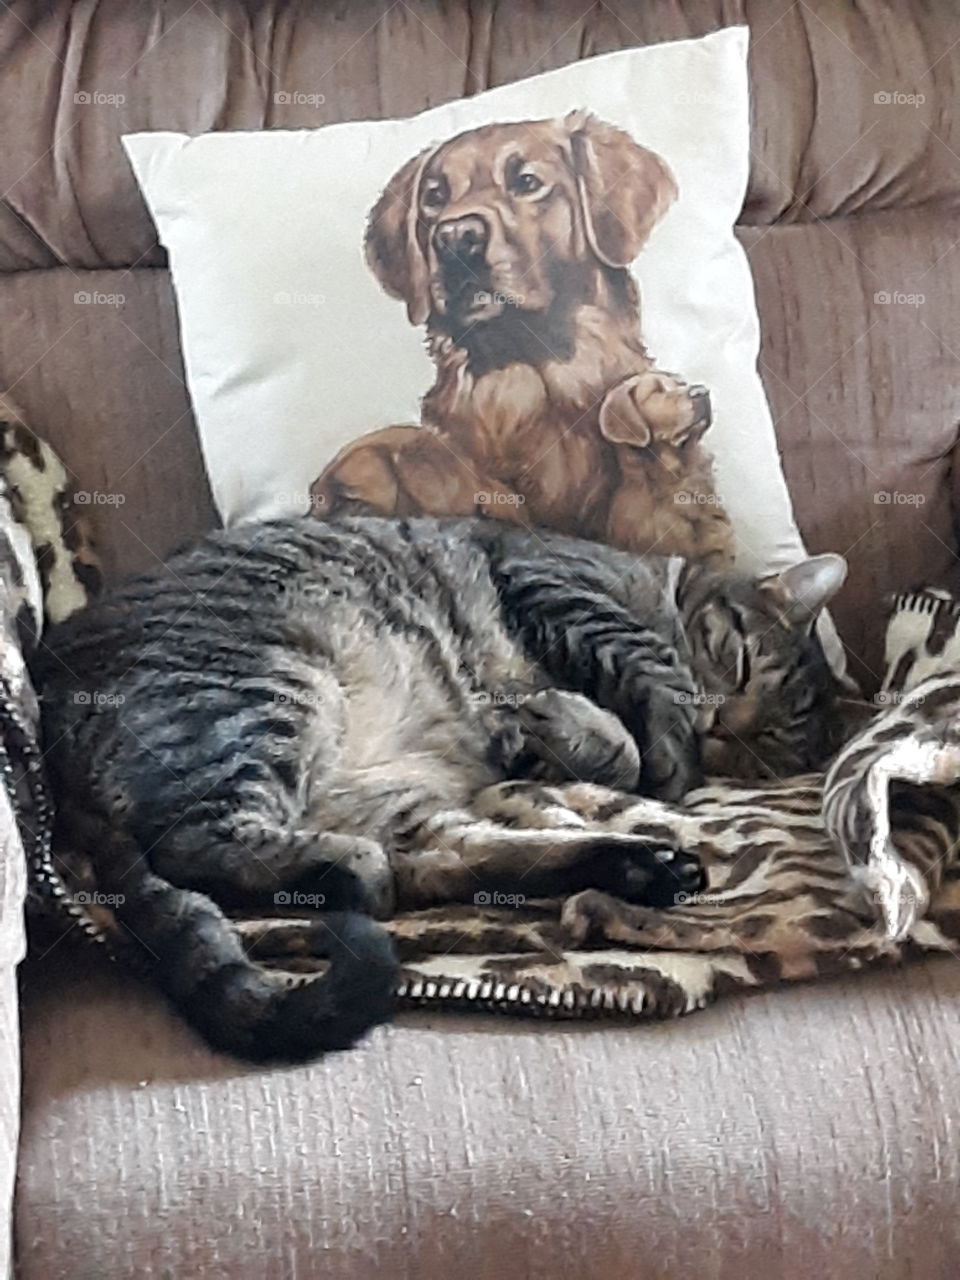 Cat nap anyone? Here's Sarge, sound asleep on Grandma's chair. Sarge loves my leopard print blanket!